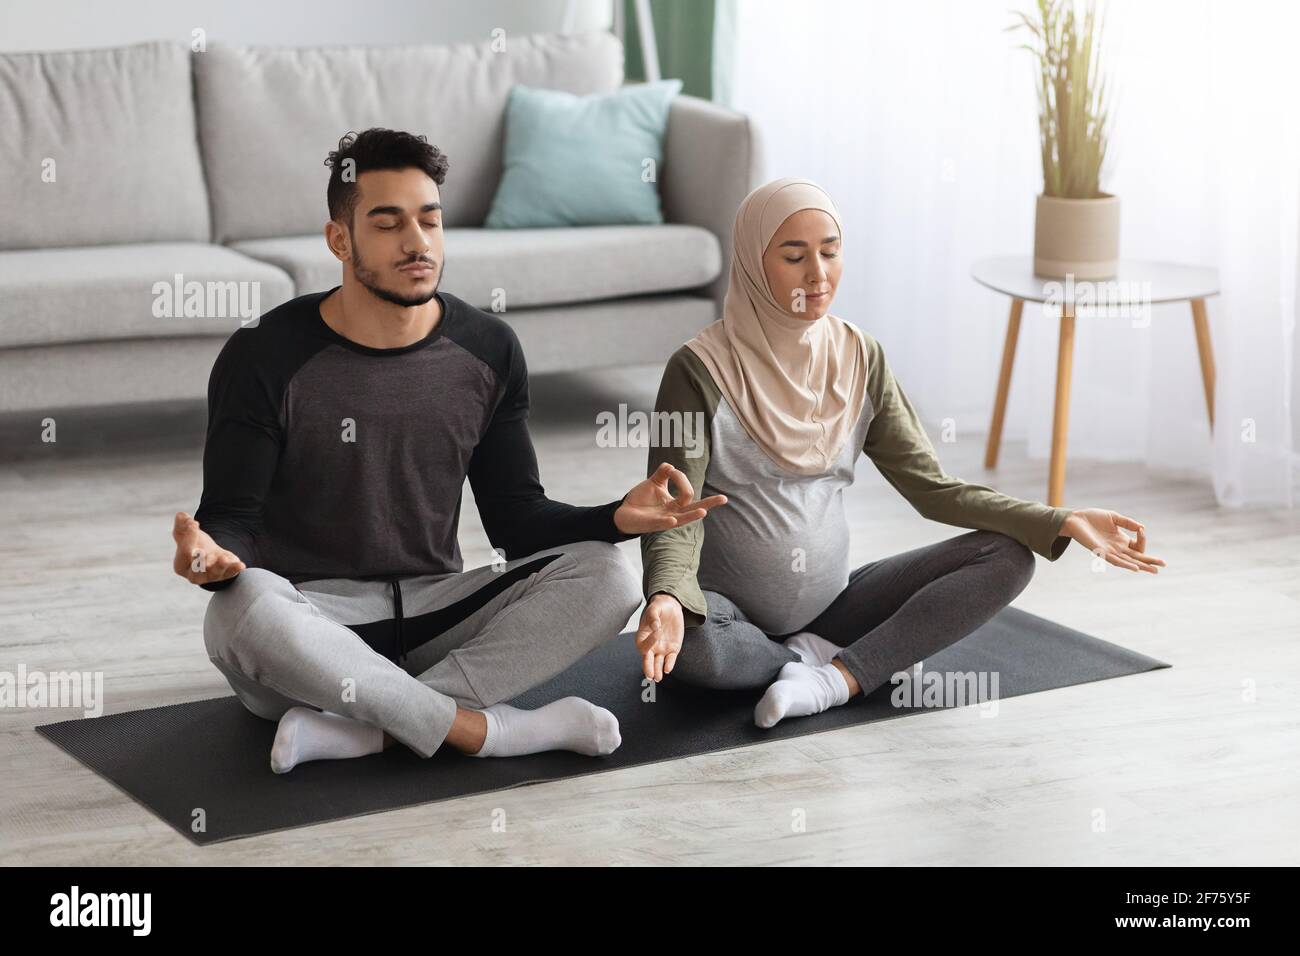 Pregnancy And Yoga. Pregnant Muslim Woman Meditating With Husband